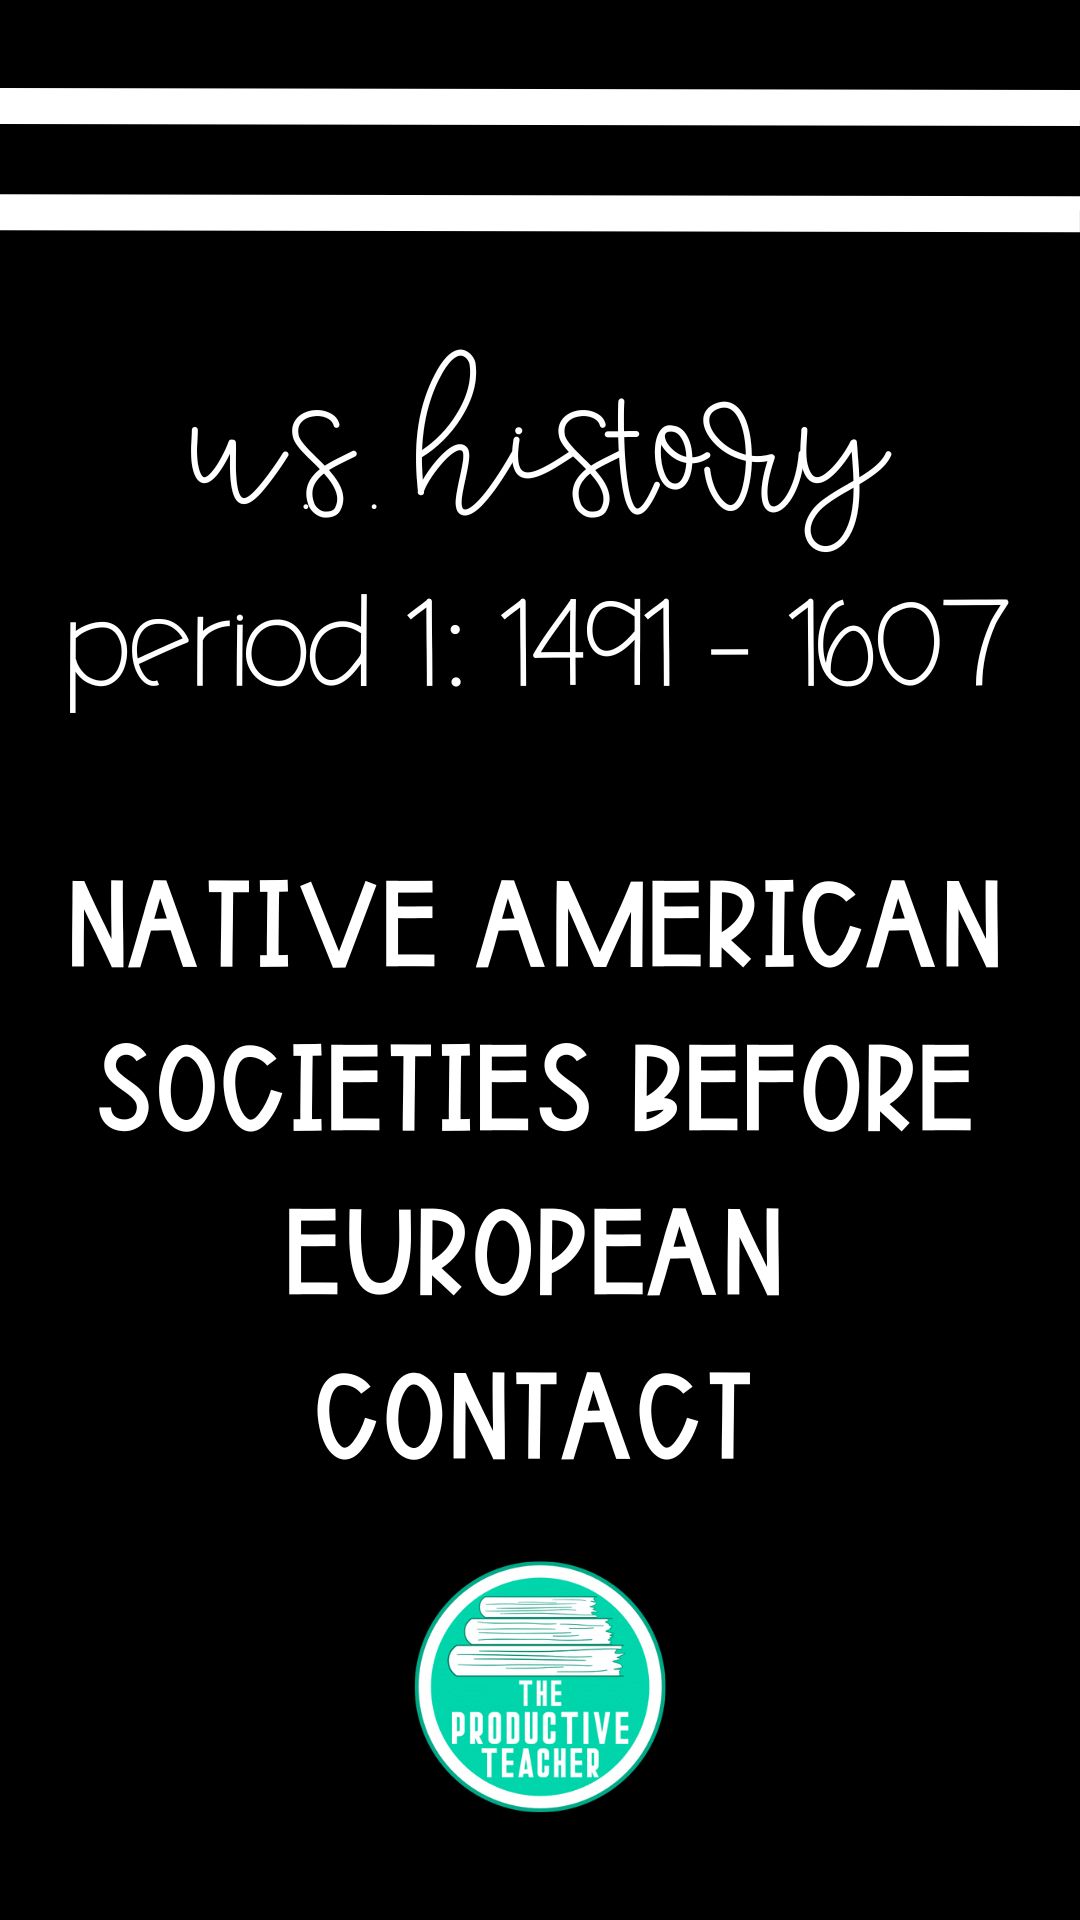 AP US History, Period 1, Native American Societies before European Contact